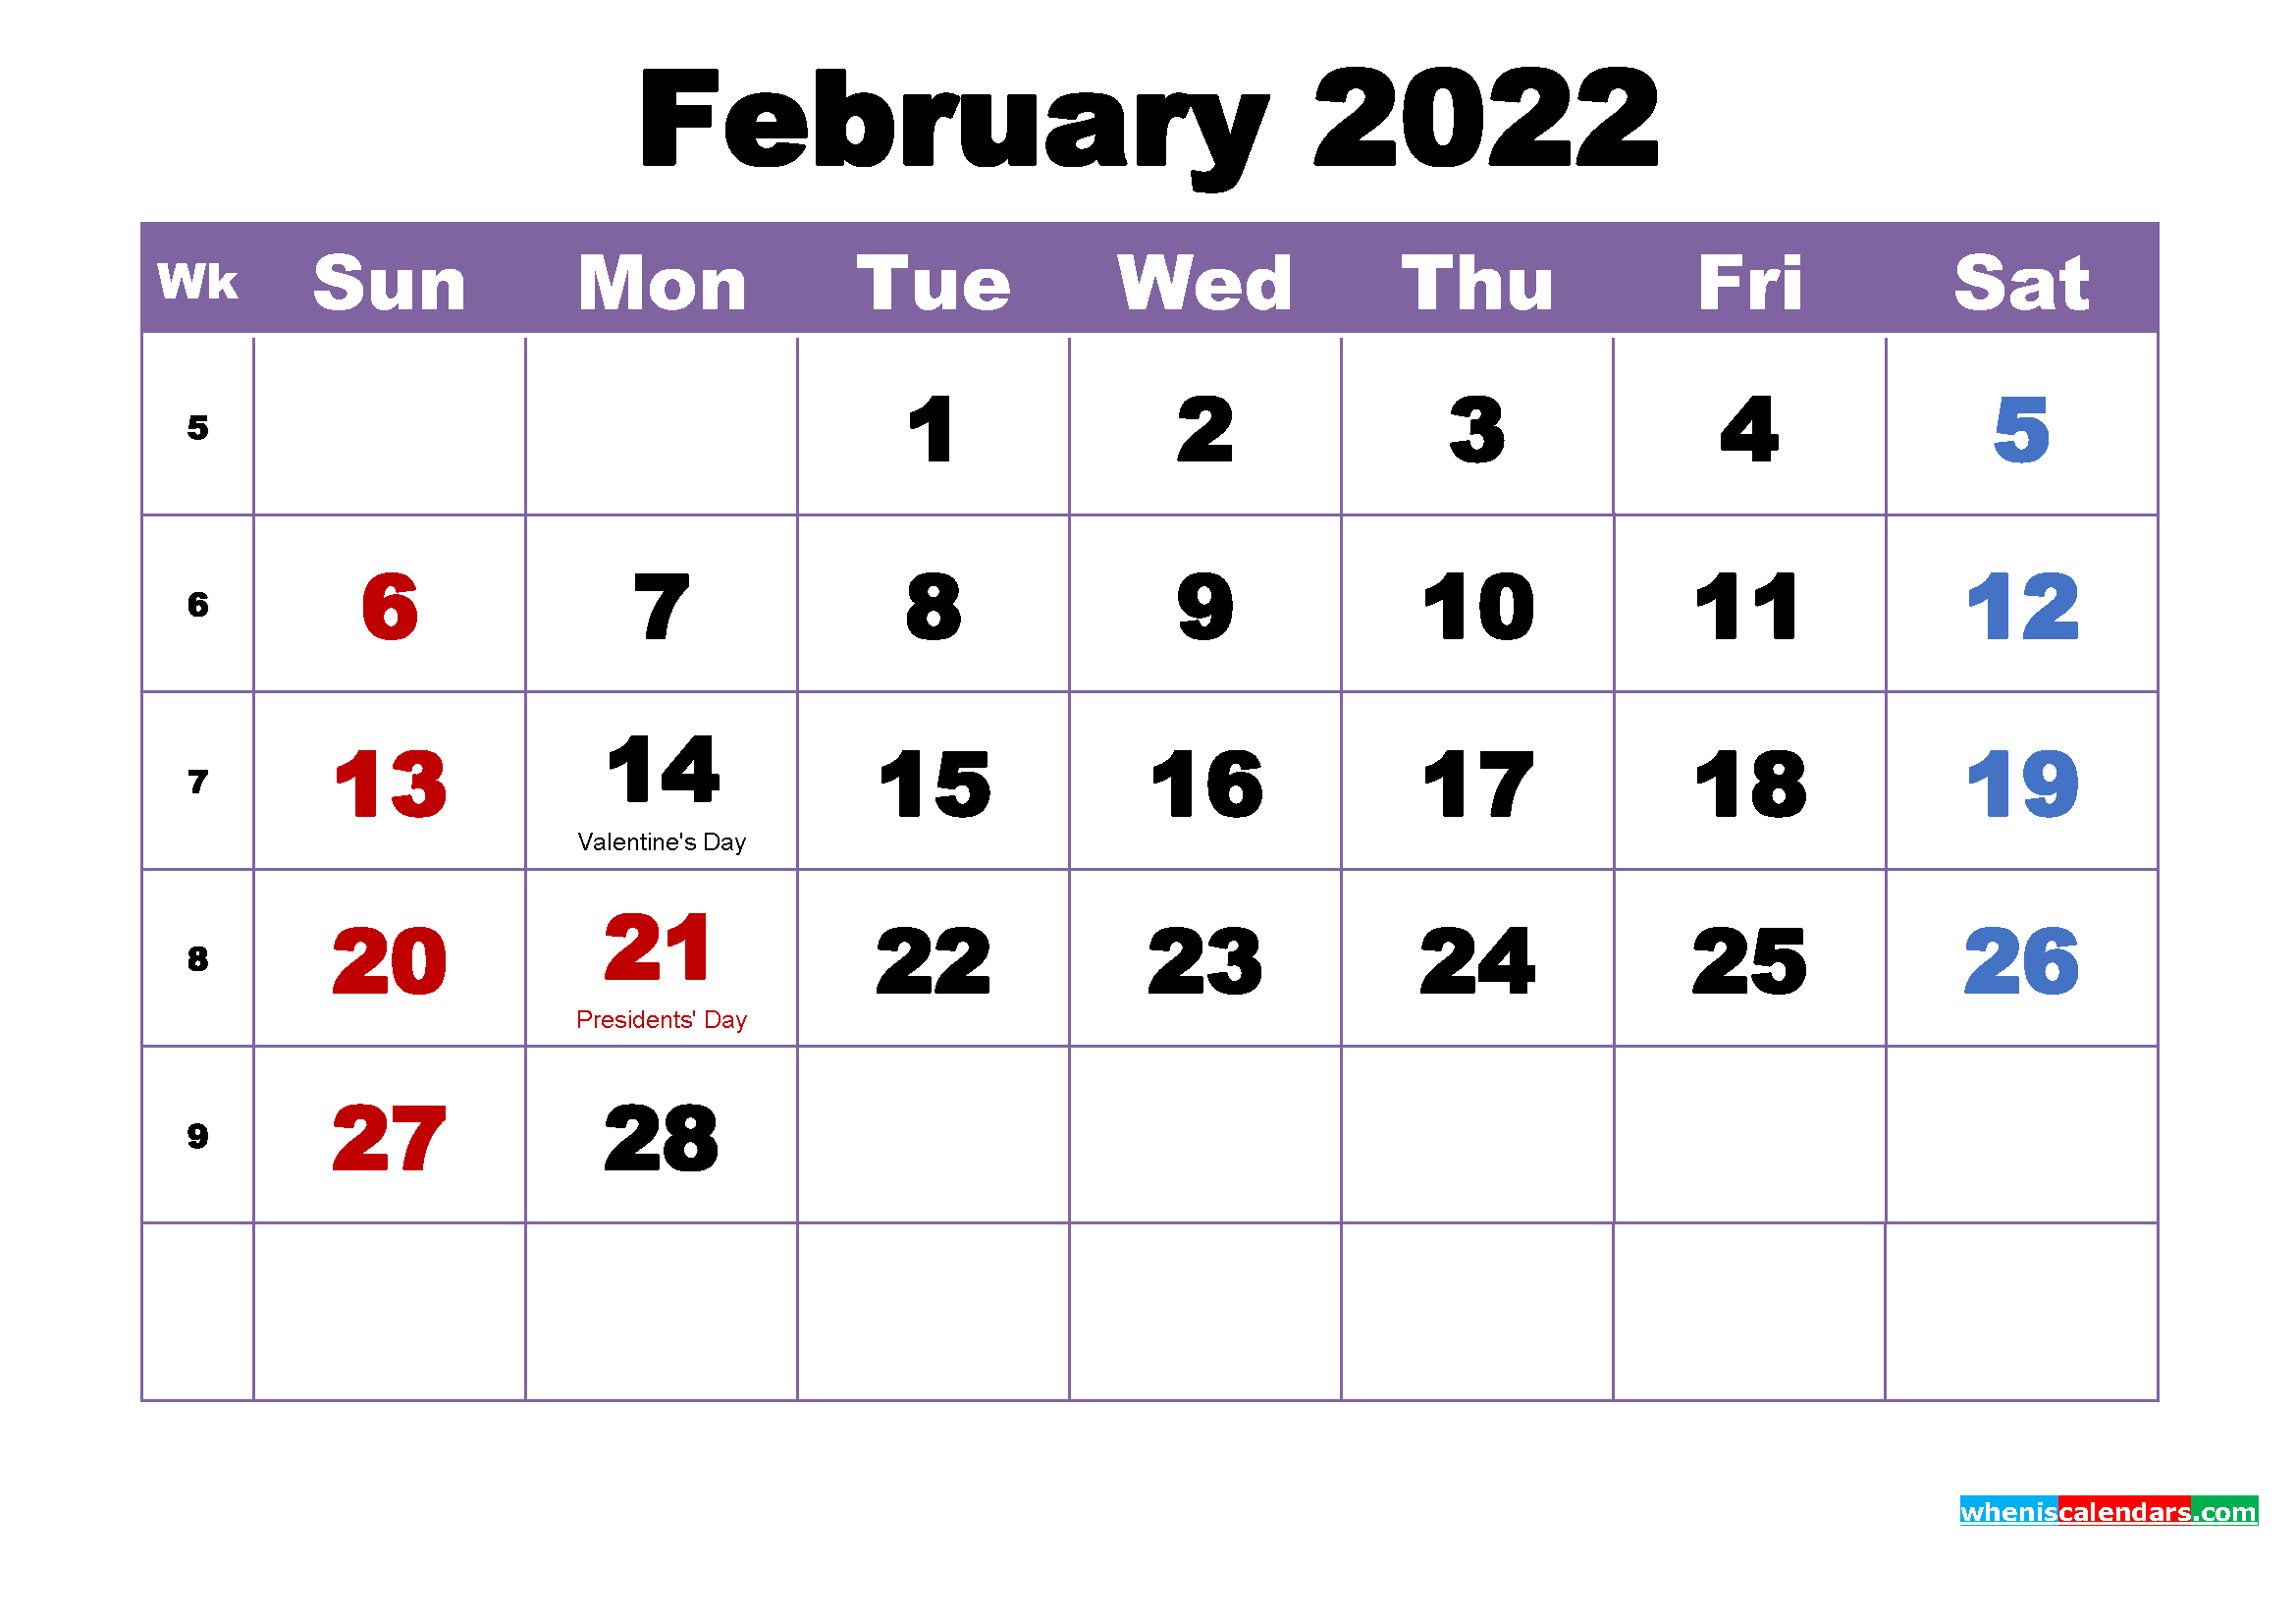 February 2022 Calendar With Holidays India - Draw-Crump